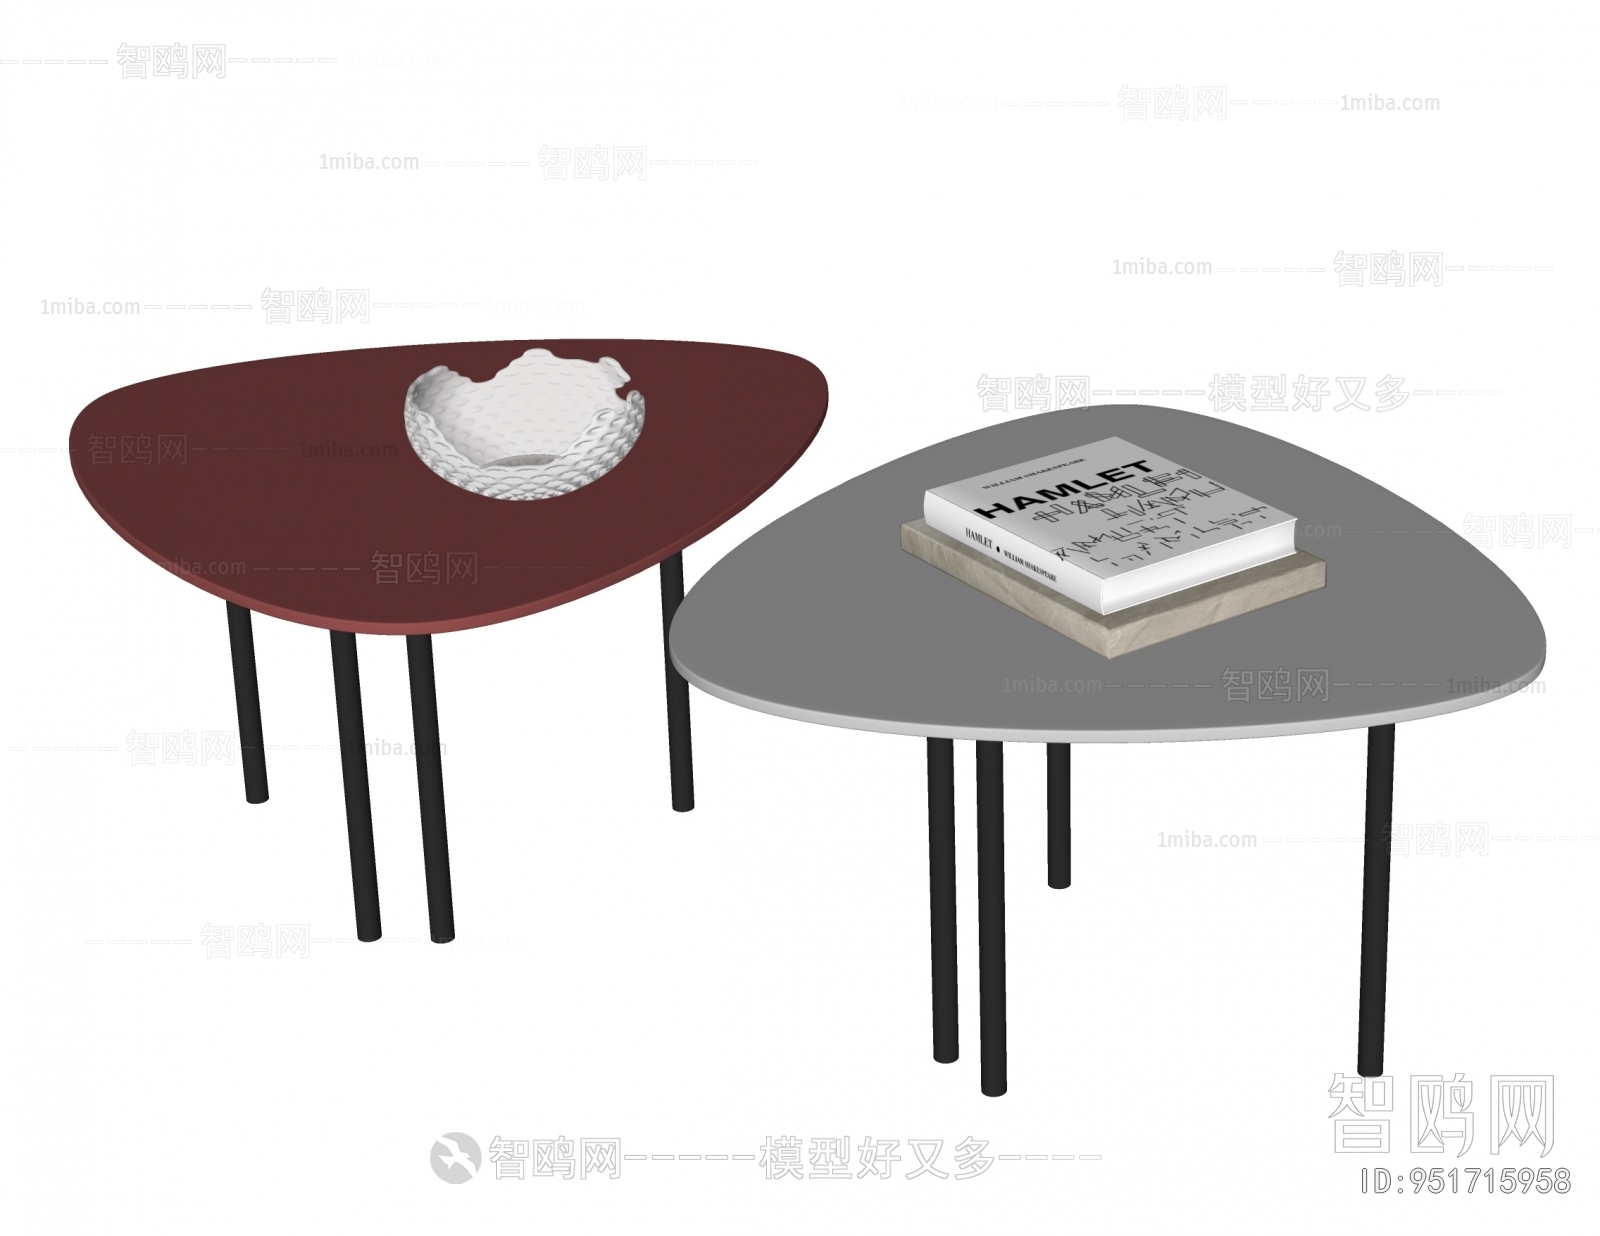 Modern Coffee Table